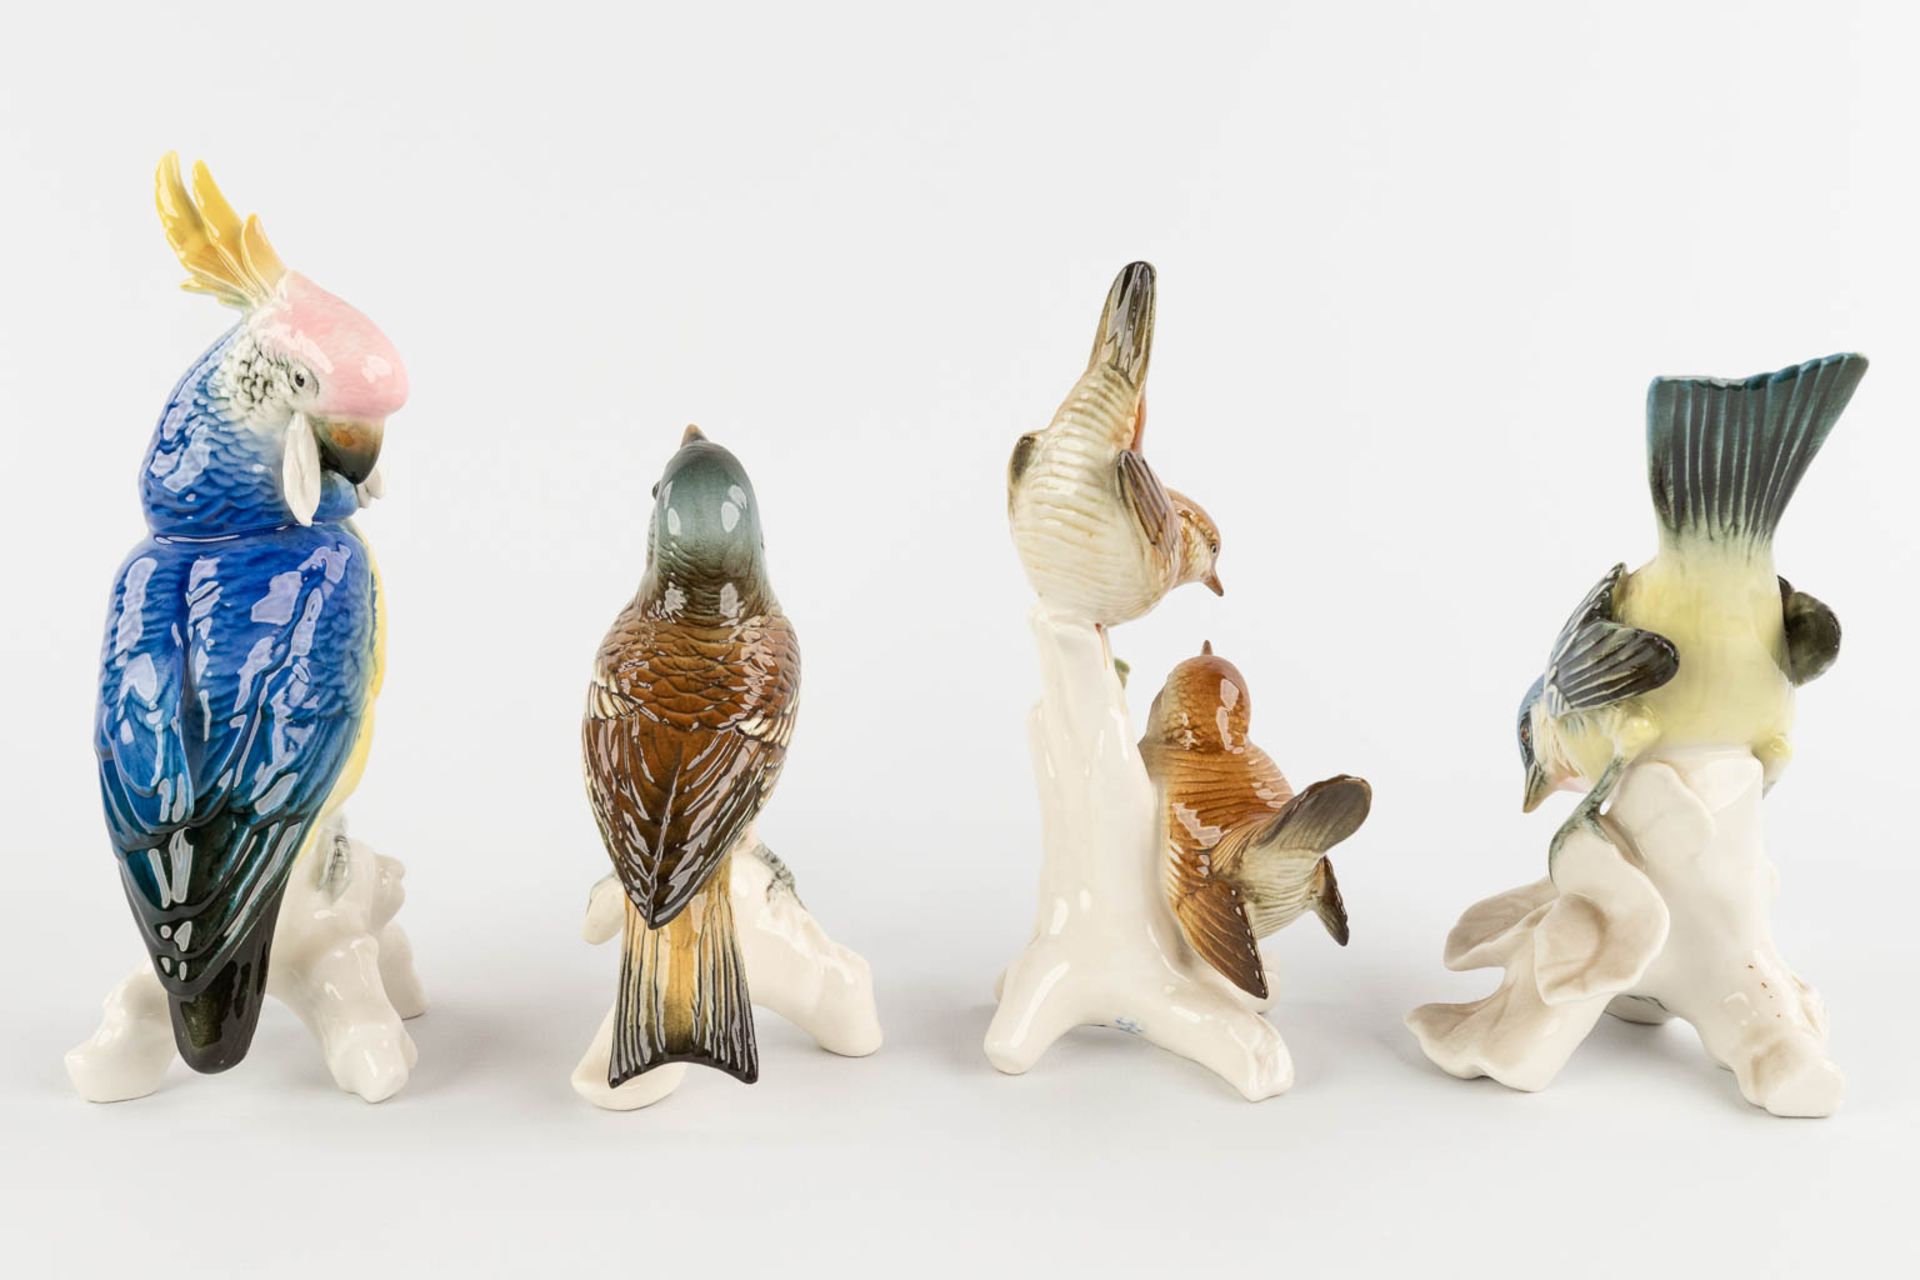 Karl ENS Porzellan, 8 birds, polychrome porcelain. 20th C. (H:19 cm) - Image 4 of 15